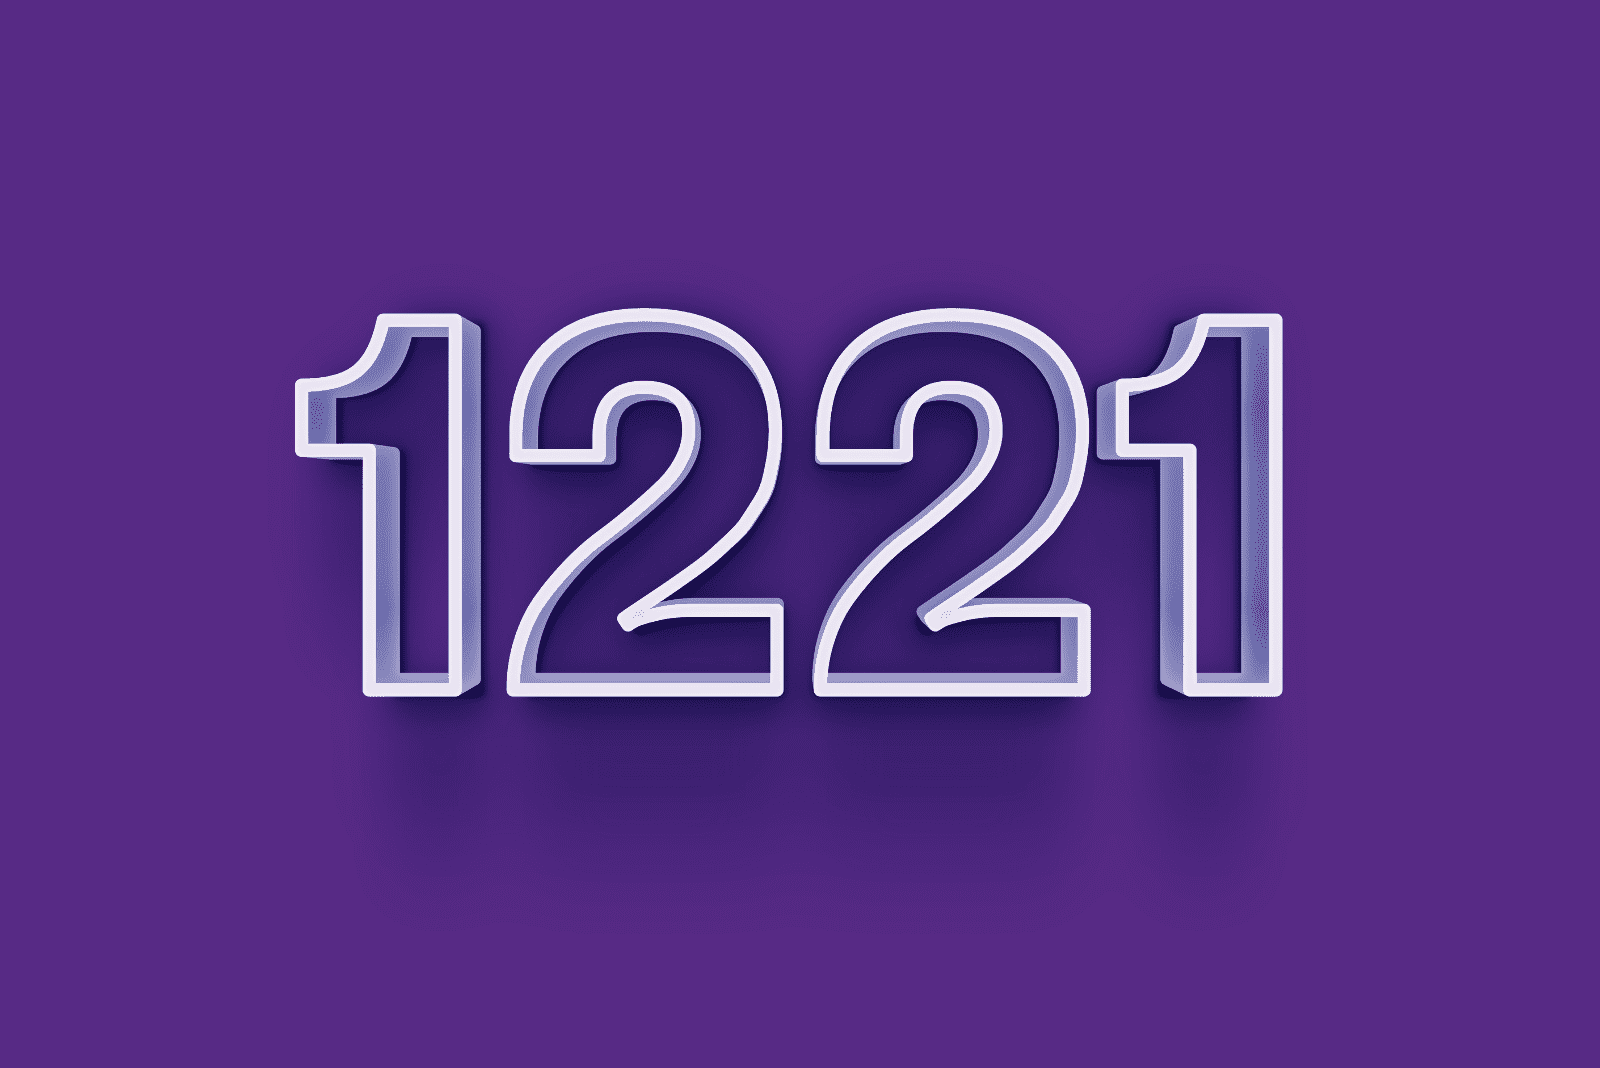 1221 on purple background